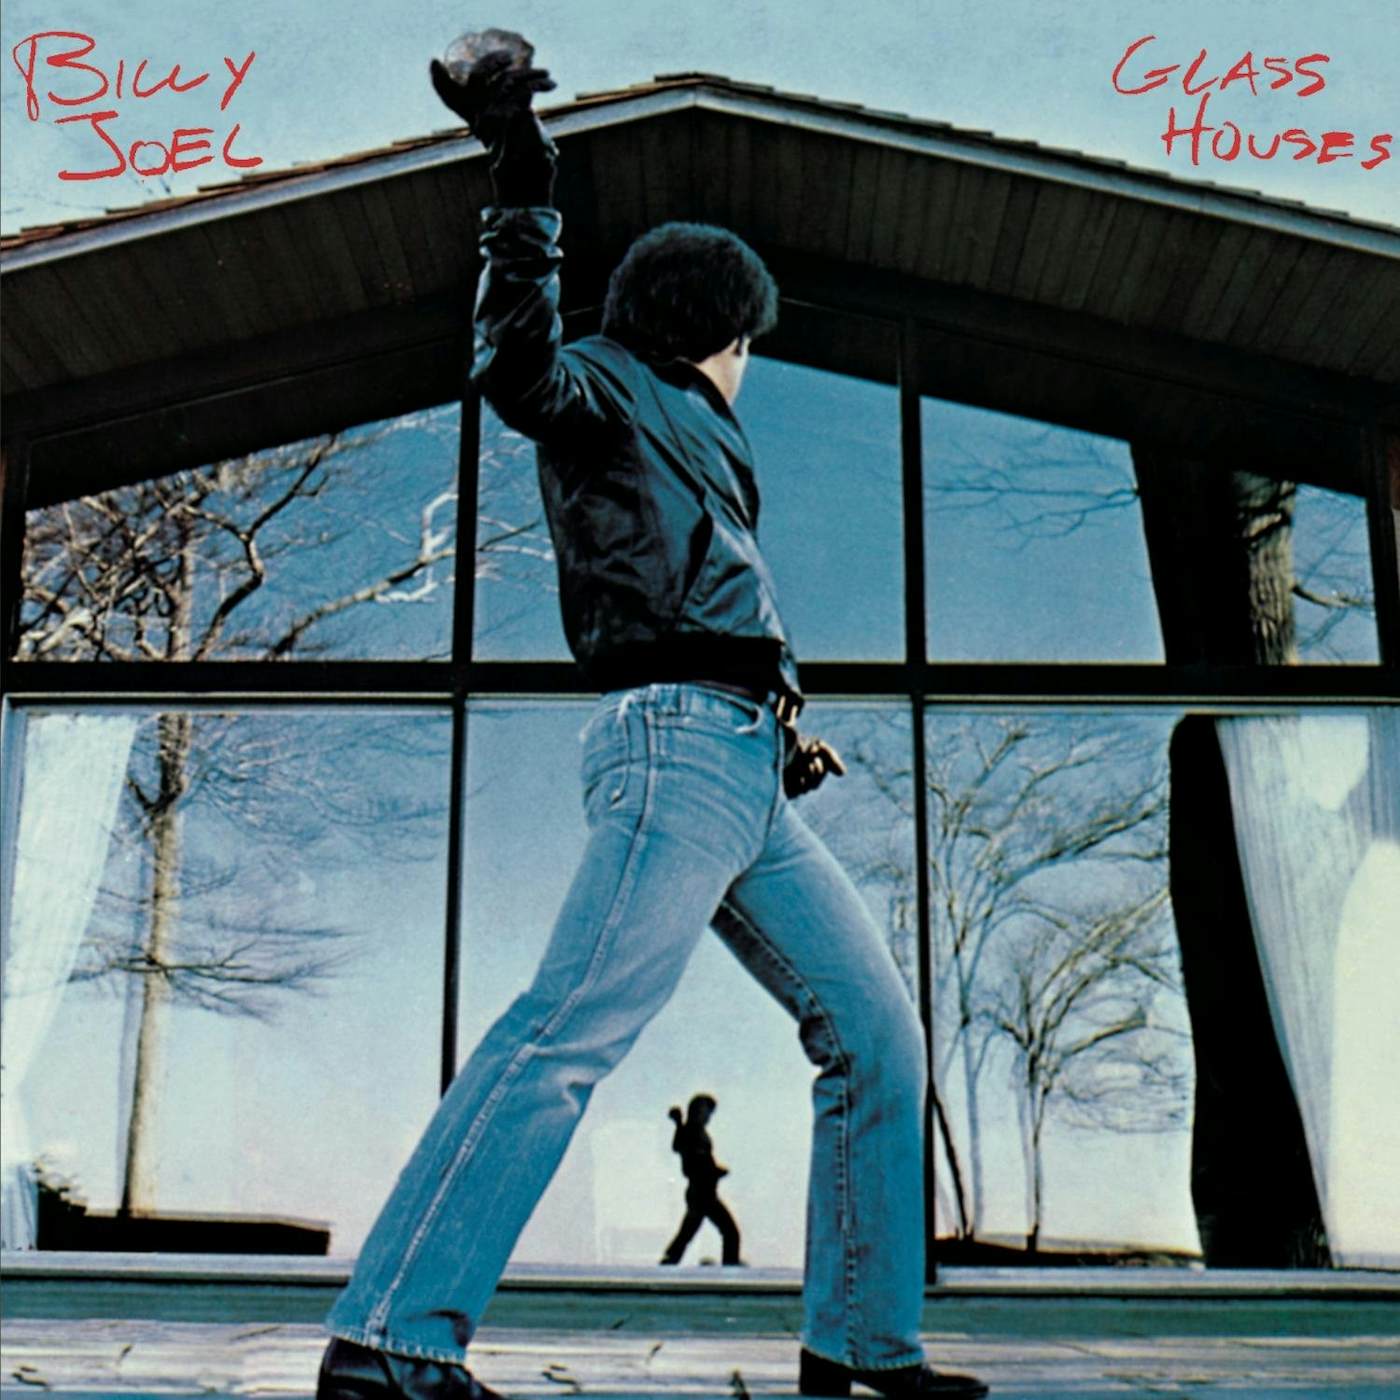 Billy Joel Glass Houses Vinyl Record